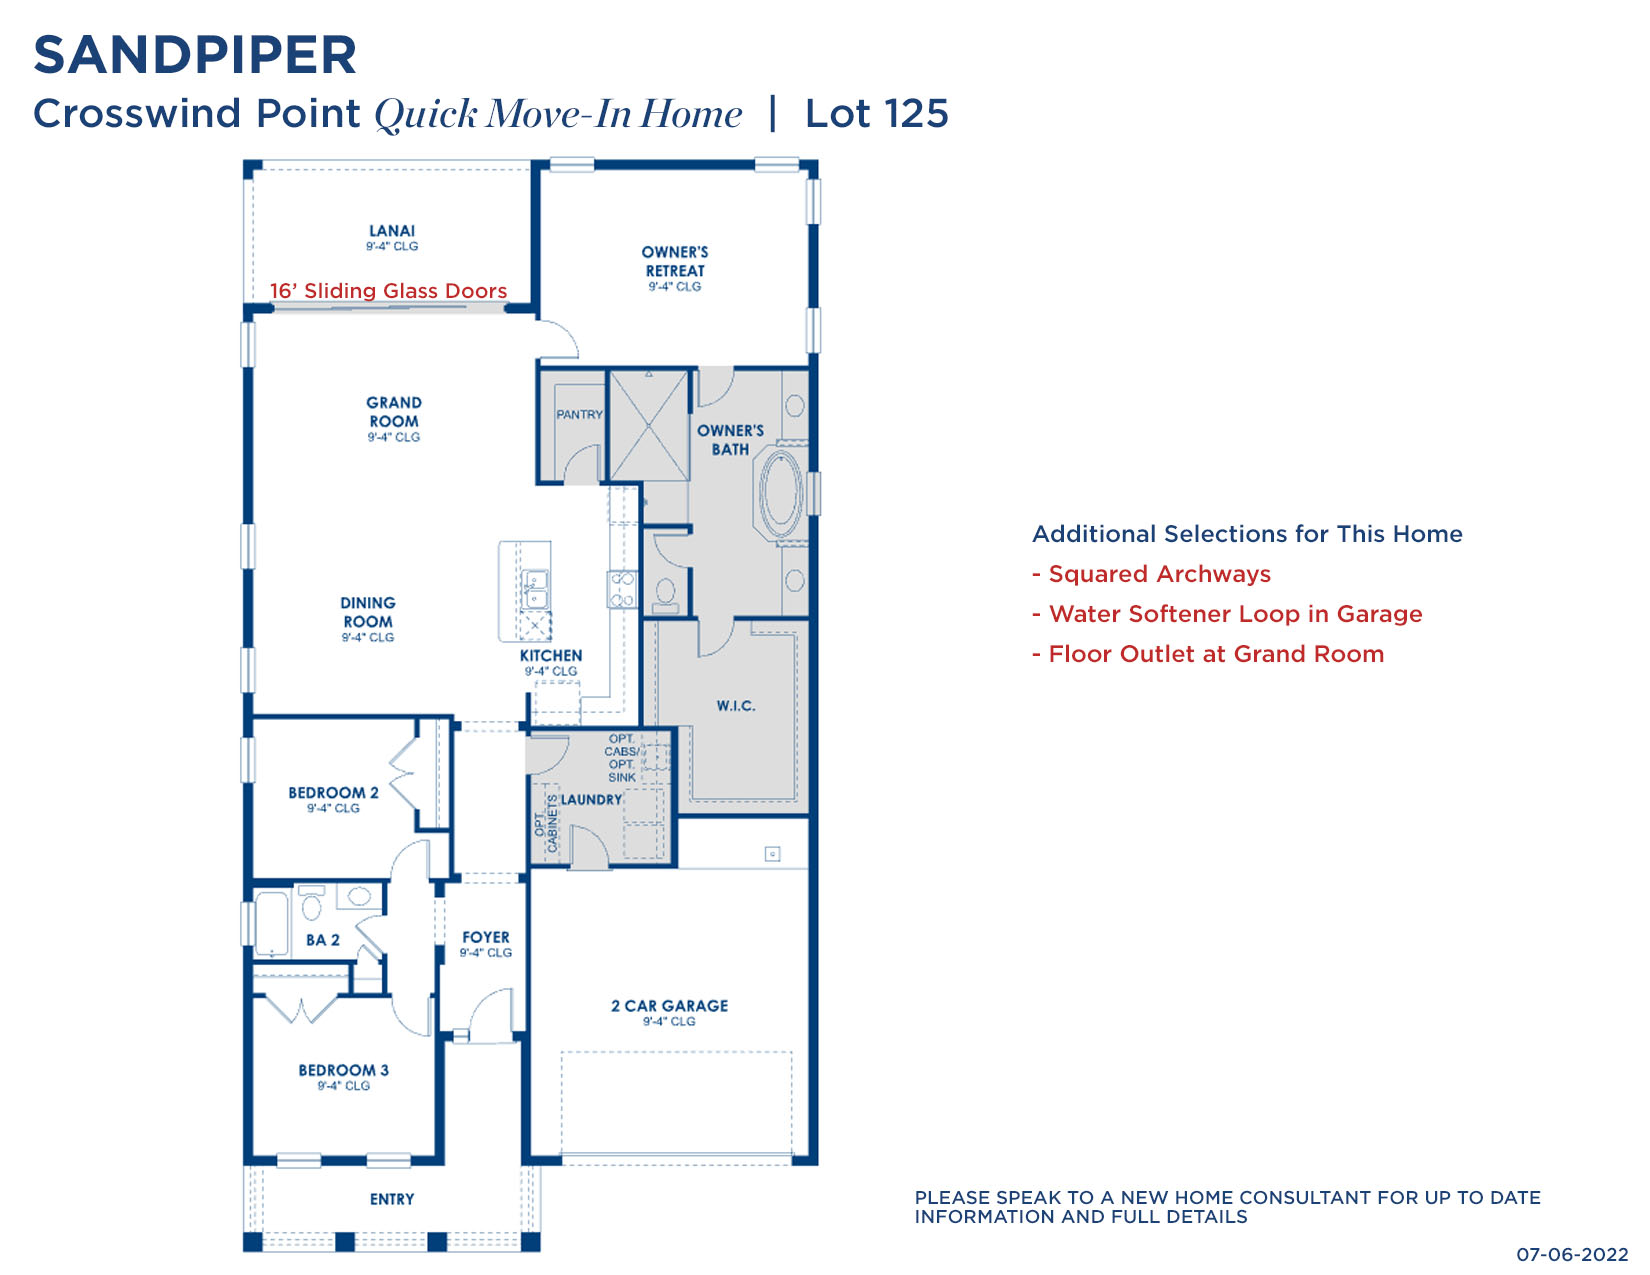 CWP SANDPIPER 125 070622 Floorplan